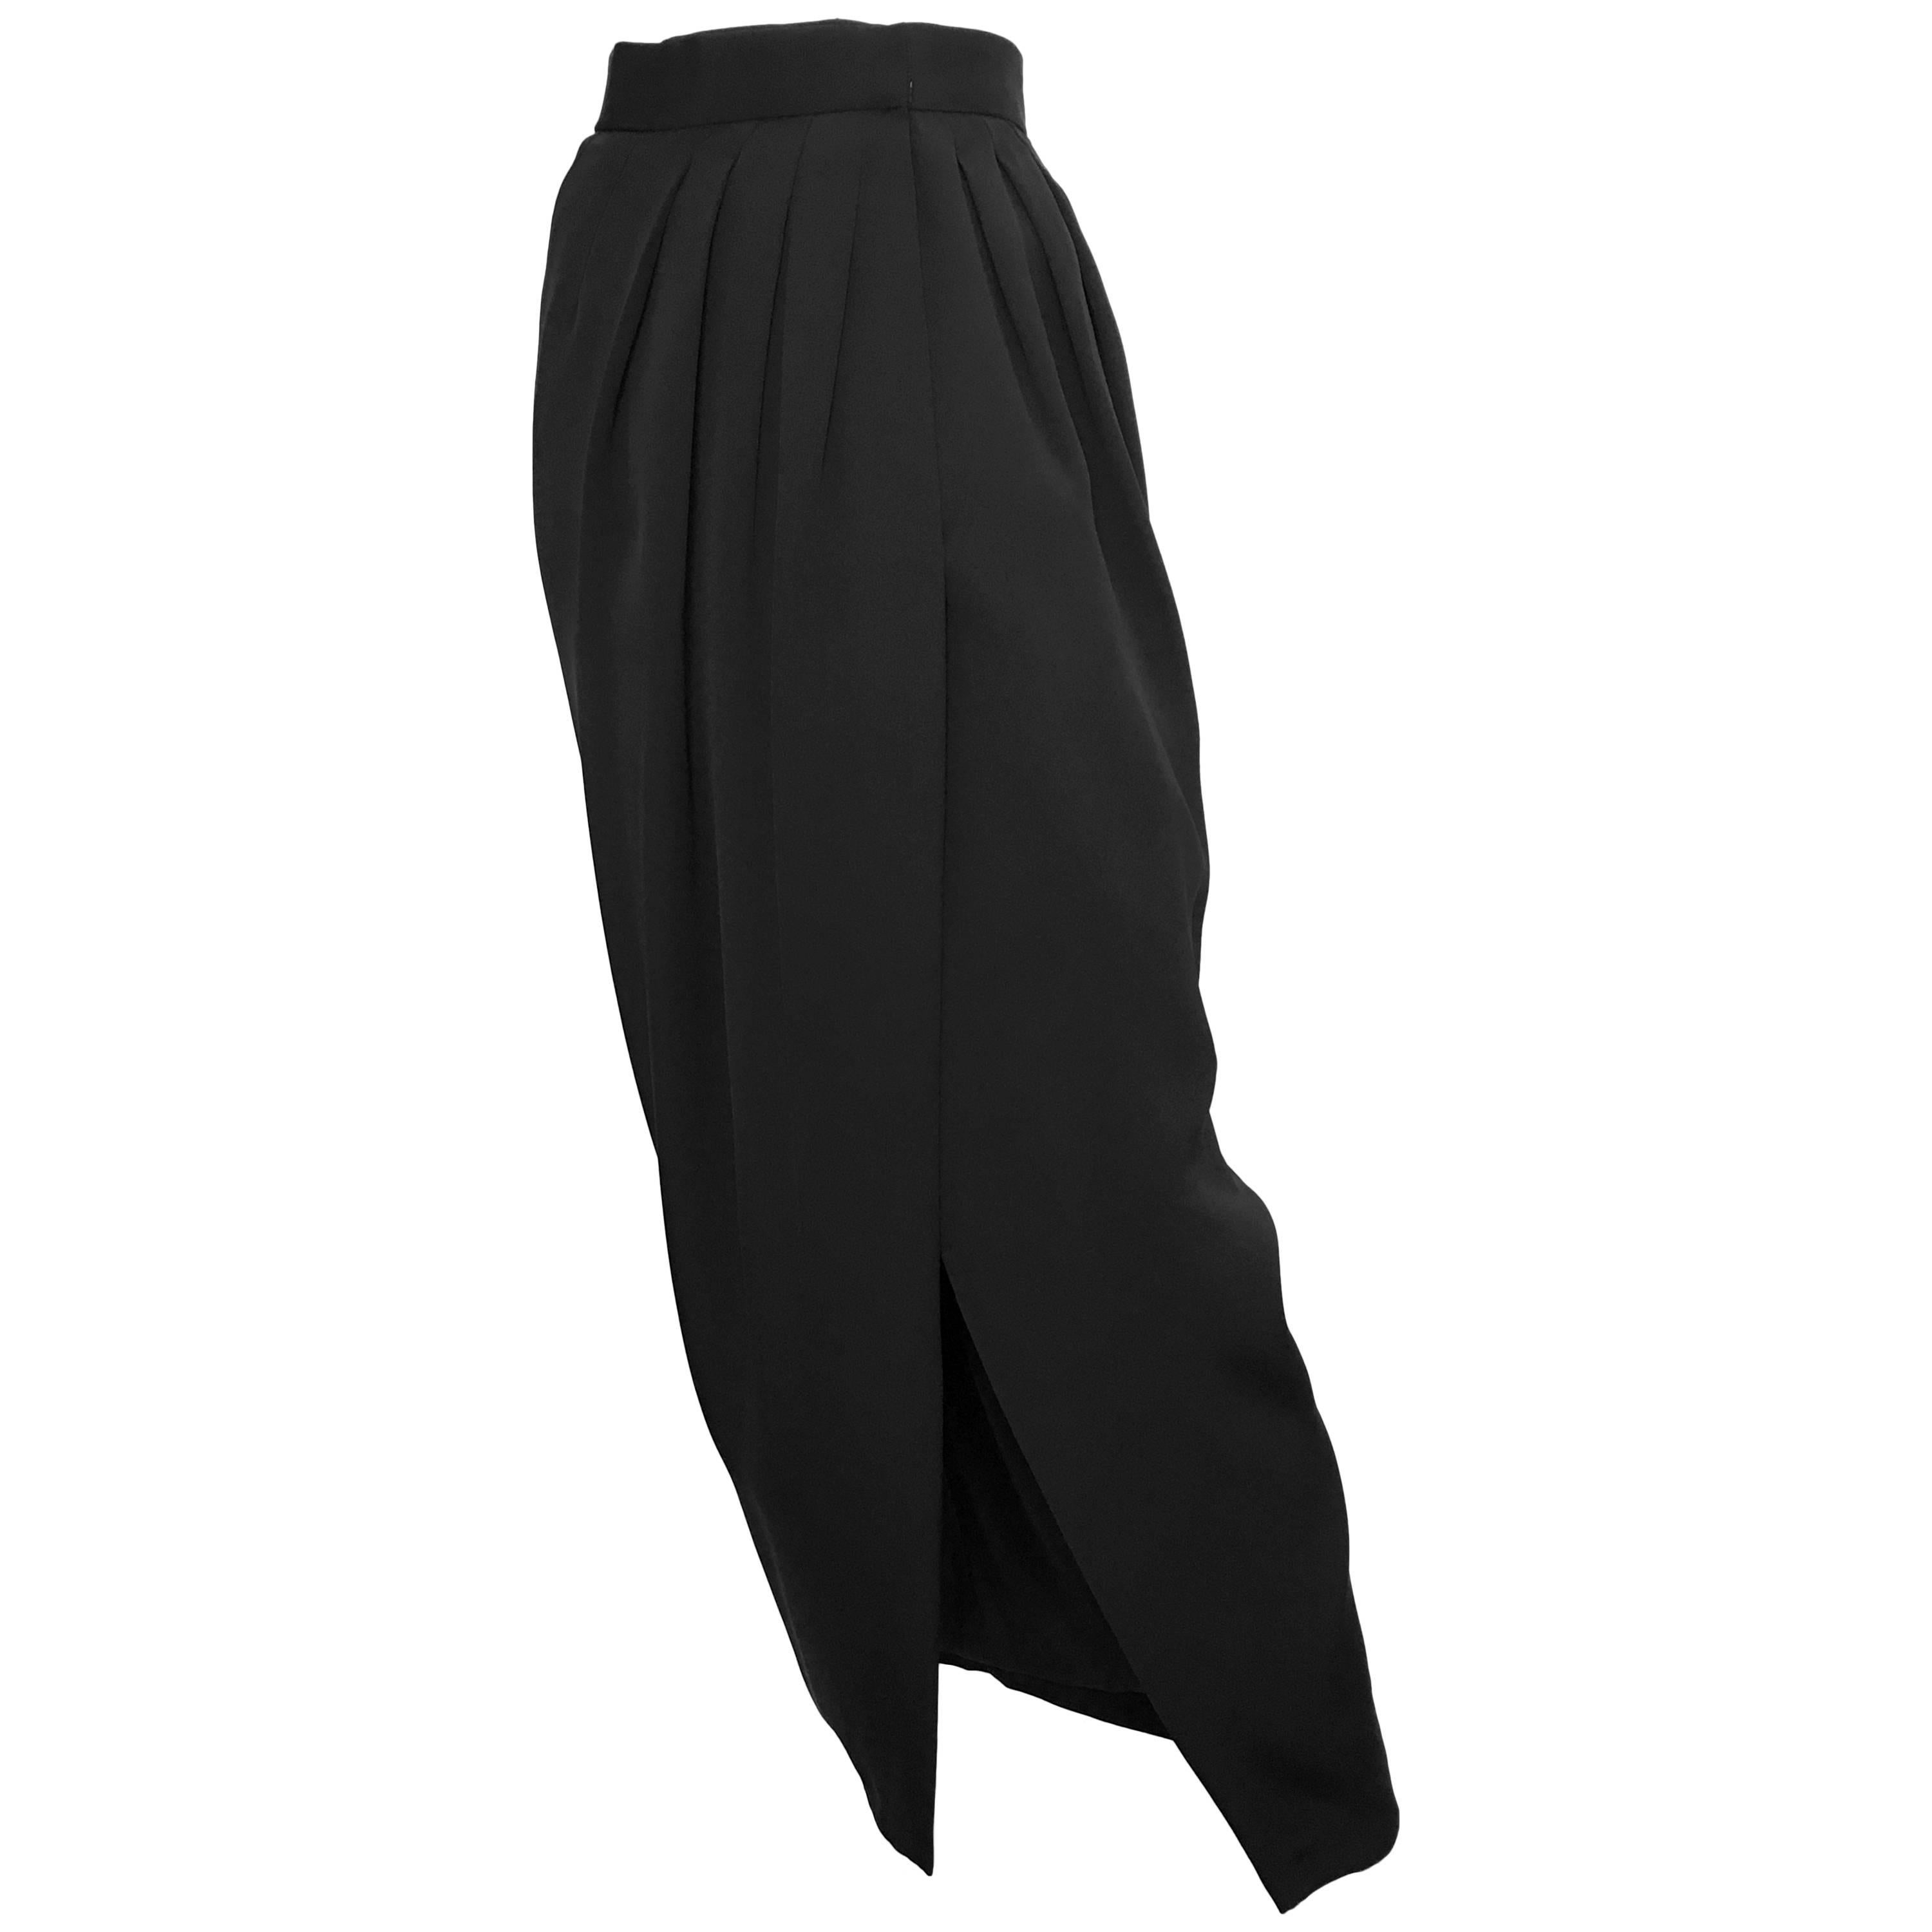 Carolyne Roehm Black Long Evening Wrap Skirt Size 4. For Sale